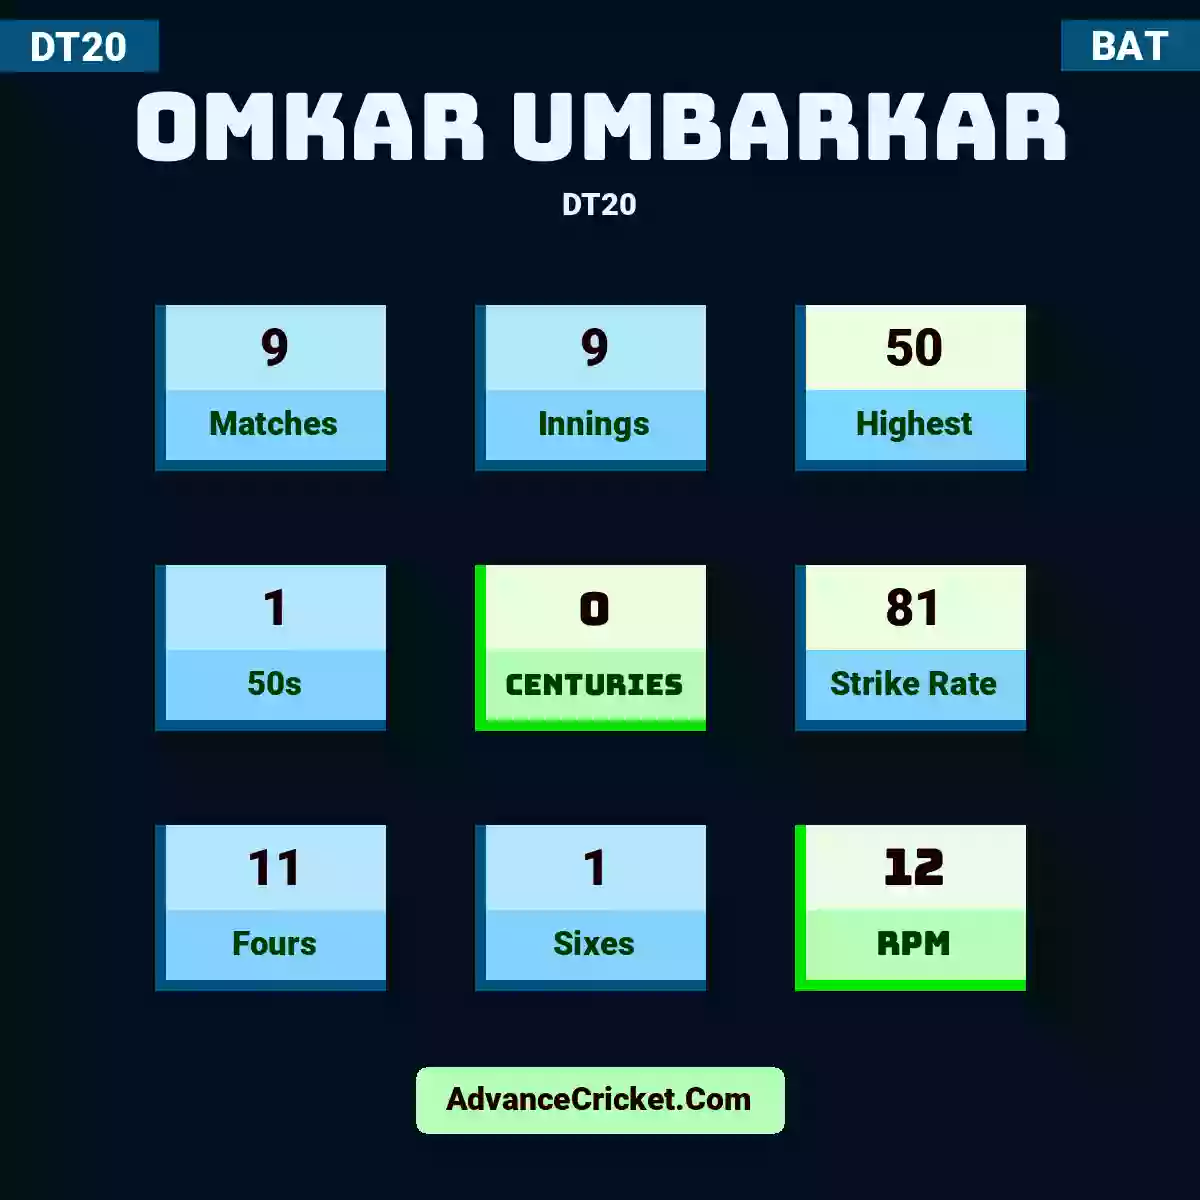 Omkar Umbarkar DT20 , Omkar Umbarkar played 9 matches, scored 50 runs as highest, 1 half-centuries, and 0 centuries, with a strike rate of 81. O.Umbarkar hit 11 fours and 1 sixes, with an RPM of 12.